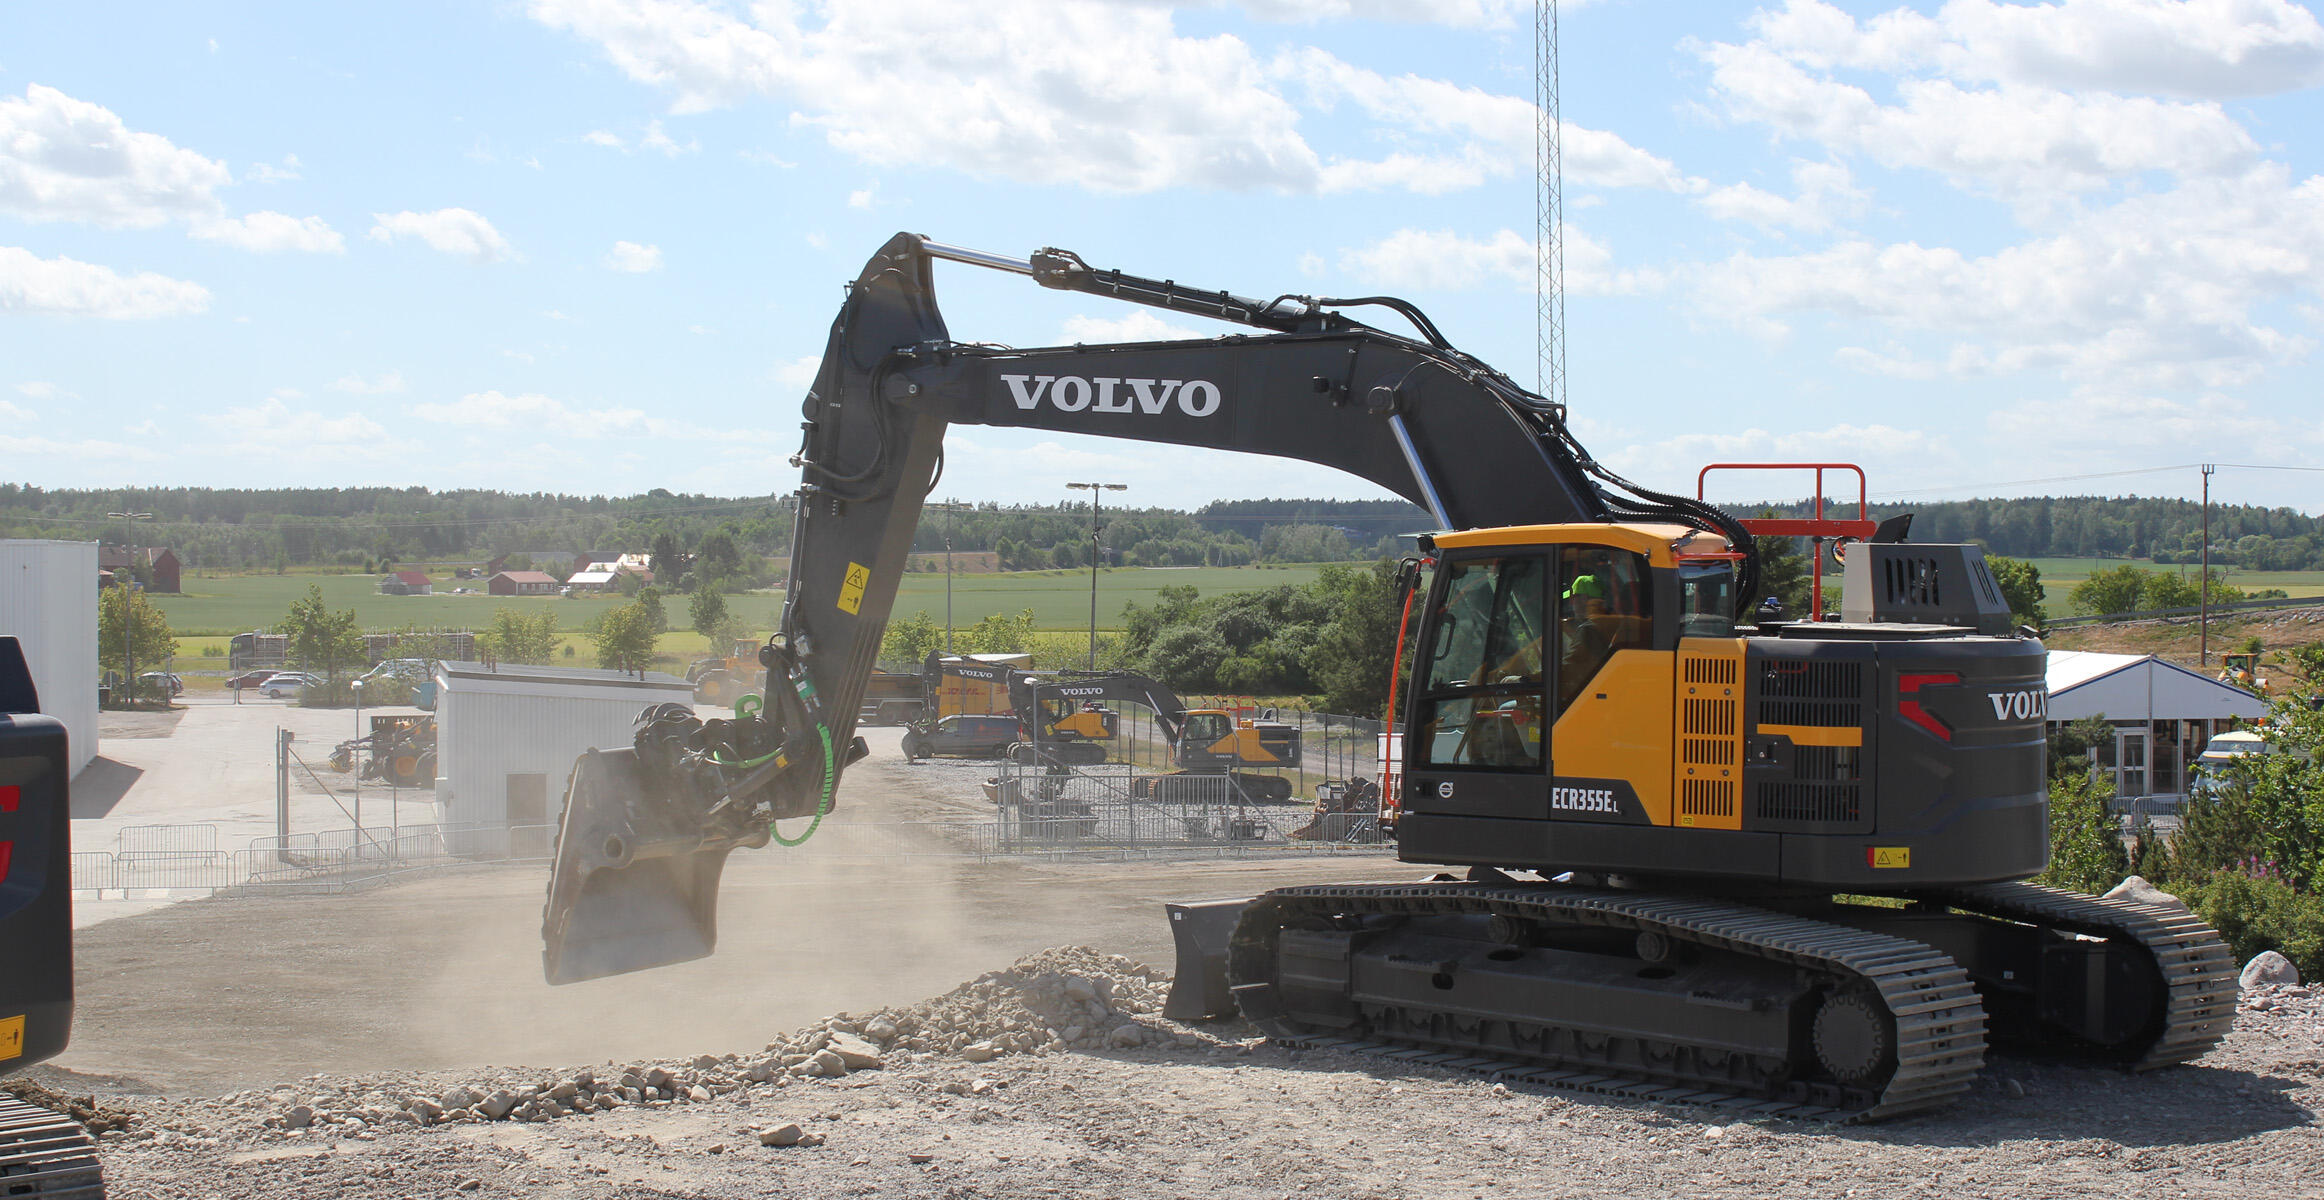 Volvo ECR355E short swing radius crawler excavator at the Volvo Customer Center in Eskilstuna, Sweden